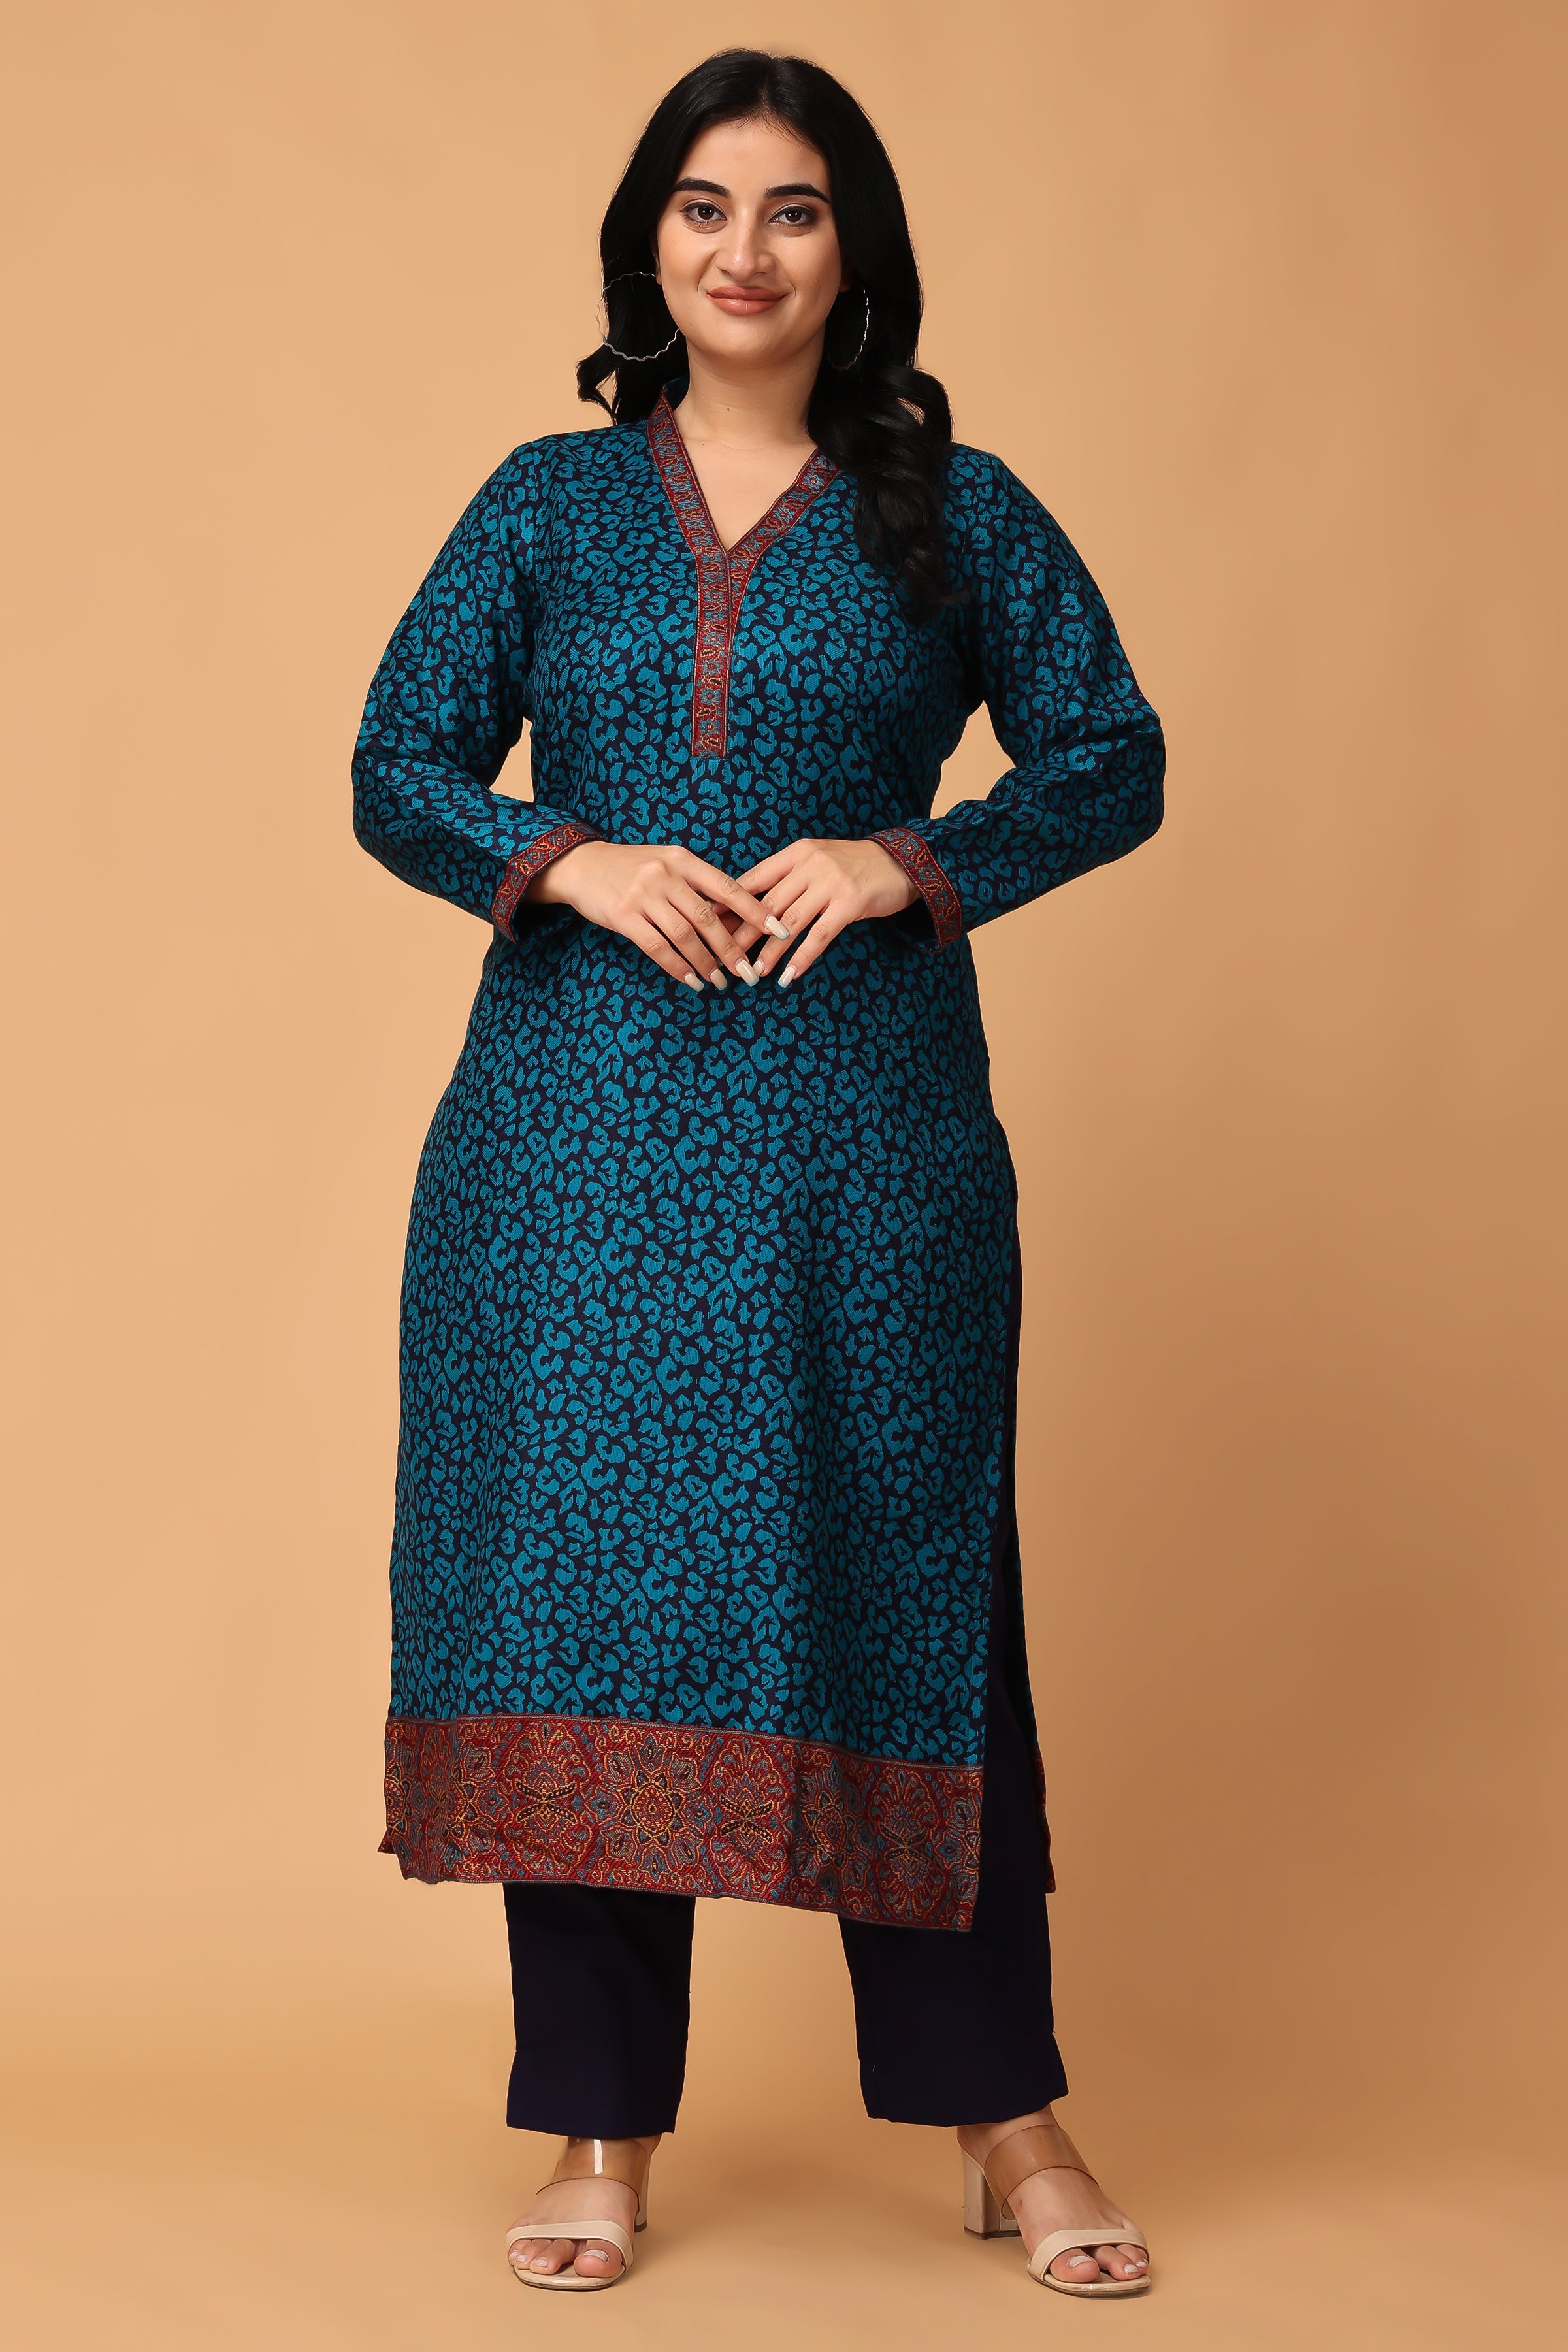 Stylish Woolen Kurti For Women - Stylish Woolen Kurti For Women  Manufacturer, Supplier, Trading Company, Ludhiana, India